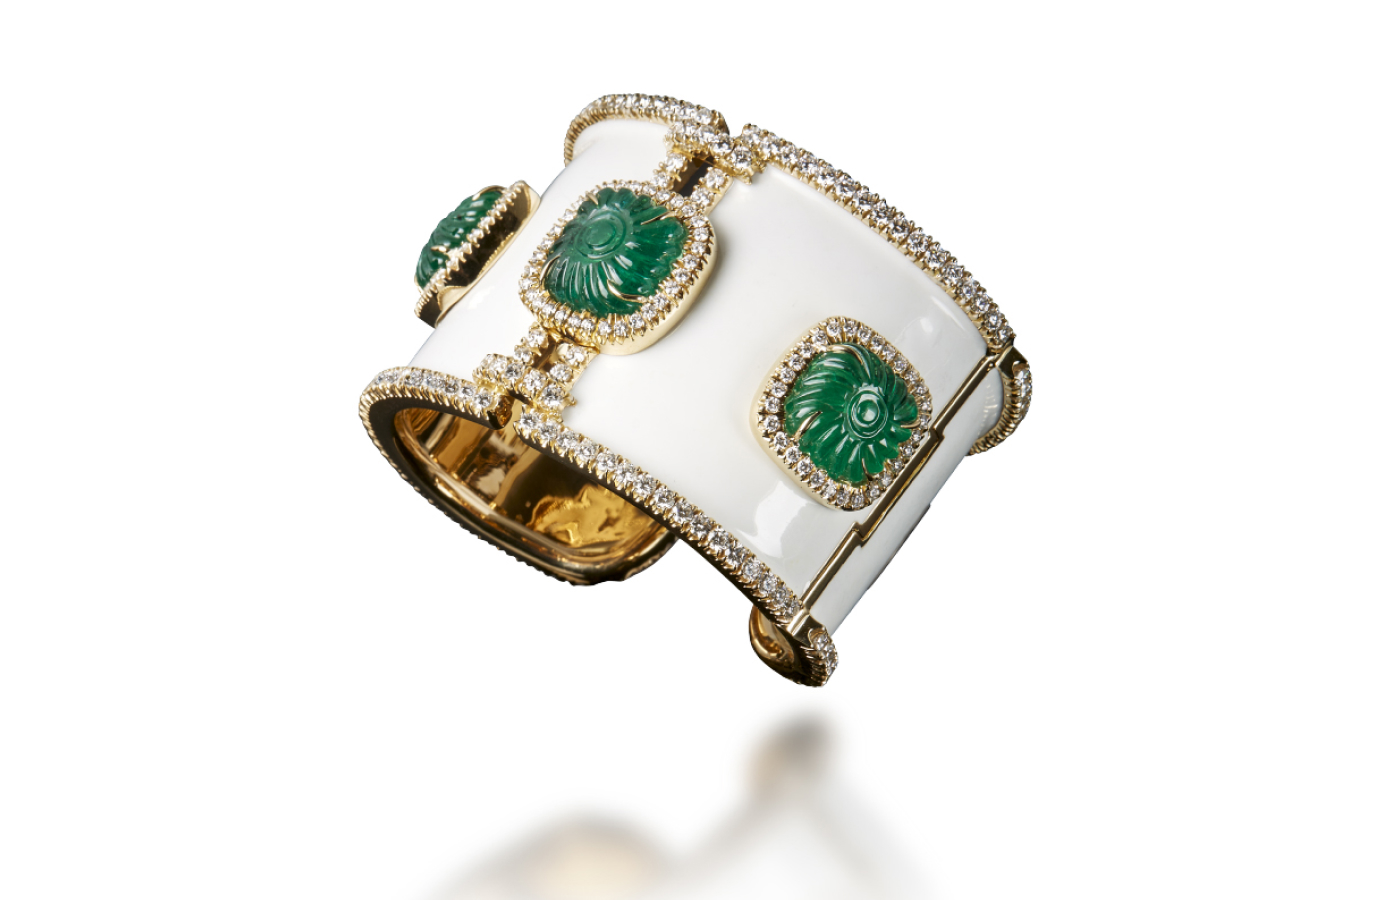 Veschetti cuff bracelet with carved emeralds, diamonds and white enamel in gold